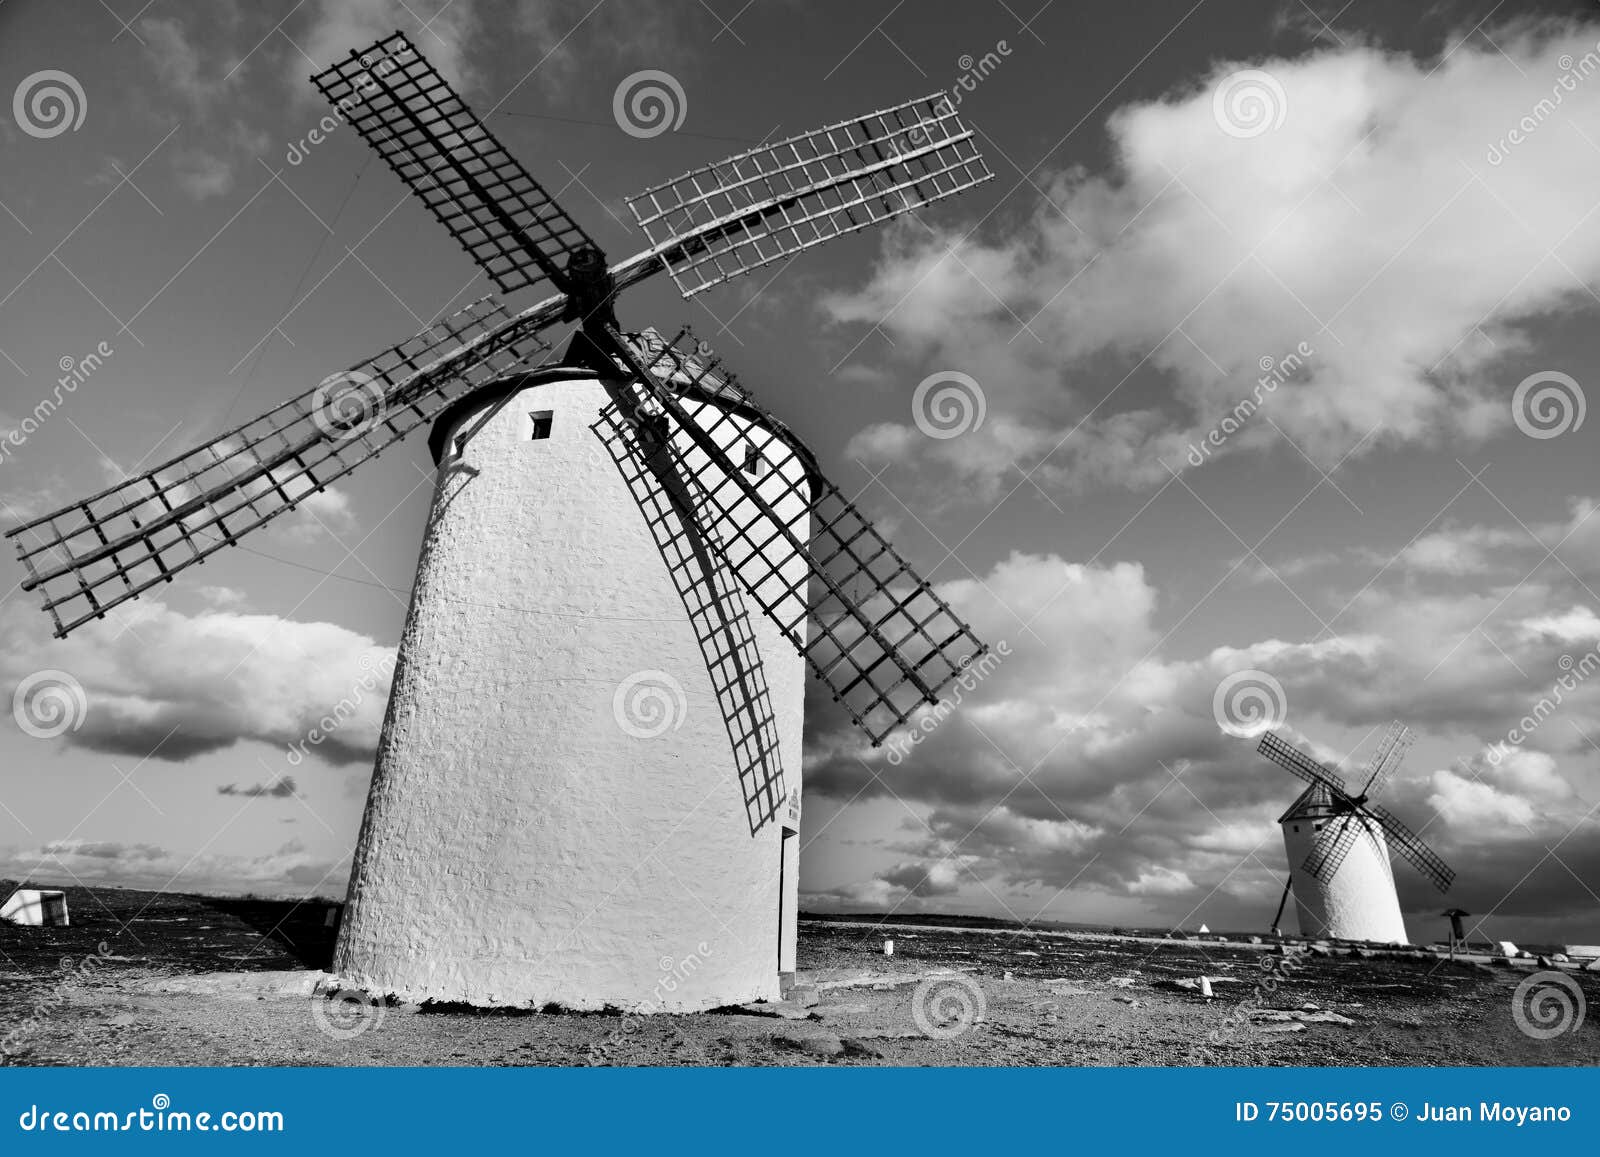 old windmills in campo de criptana, spain, black and white